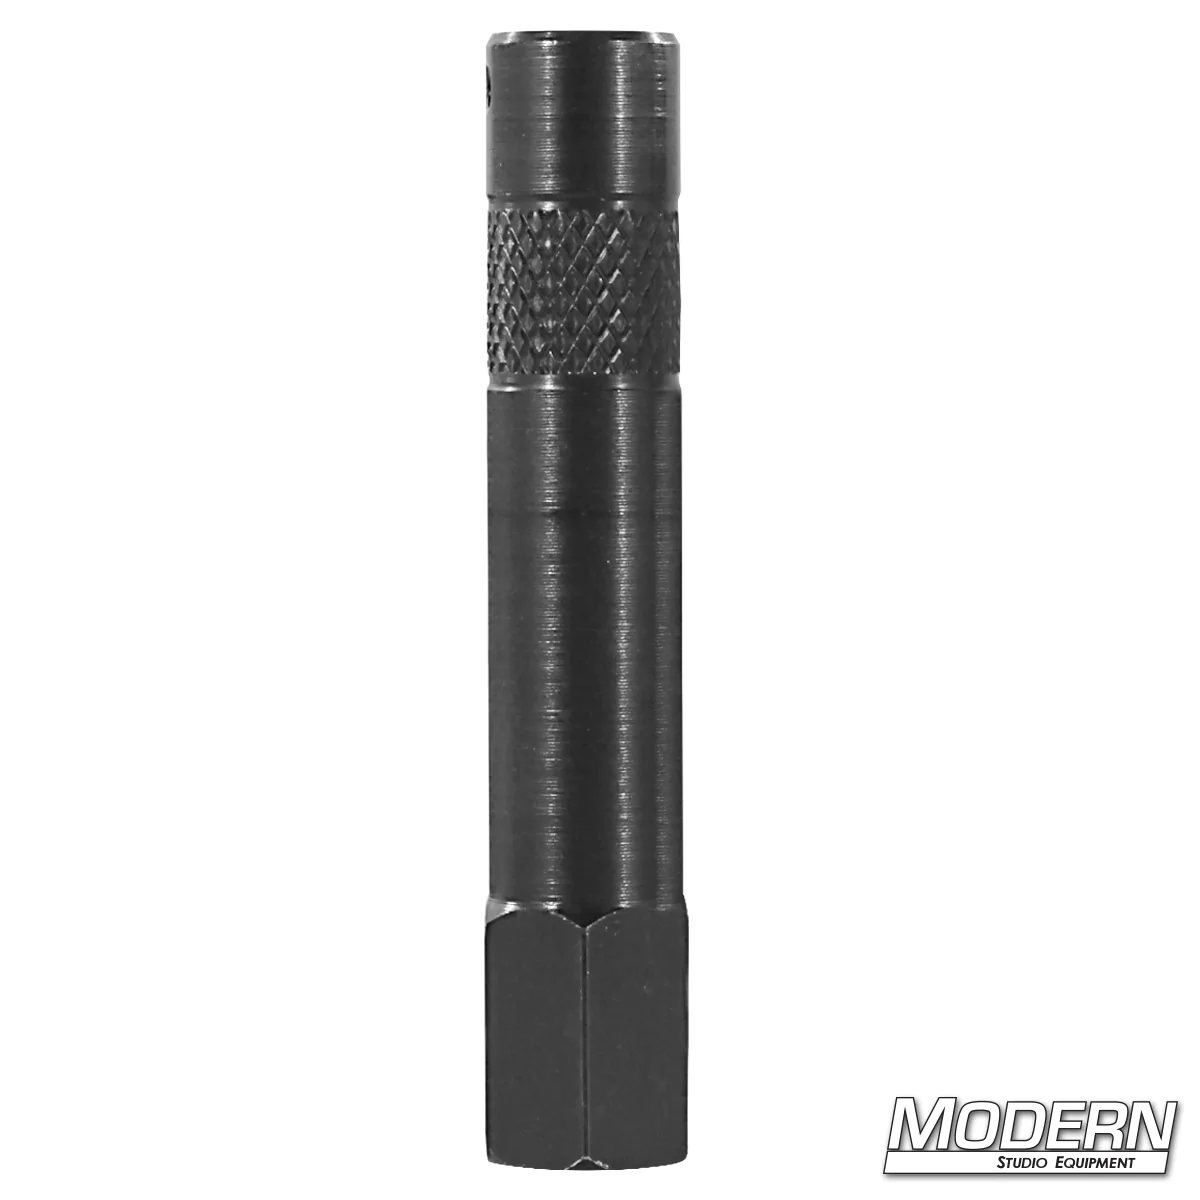 3-inch Steel Baby Pin with 3/8-inch Female Thread - Black Zinc